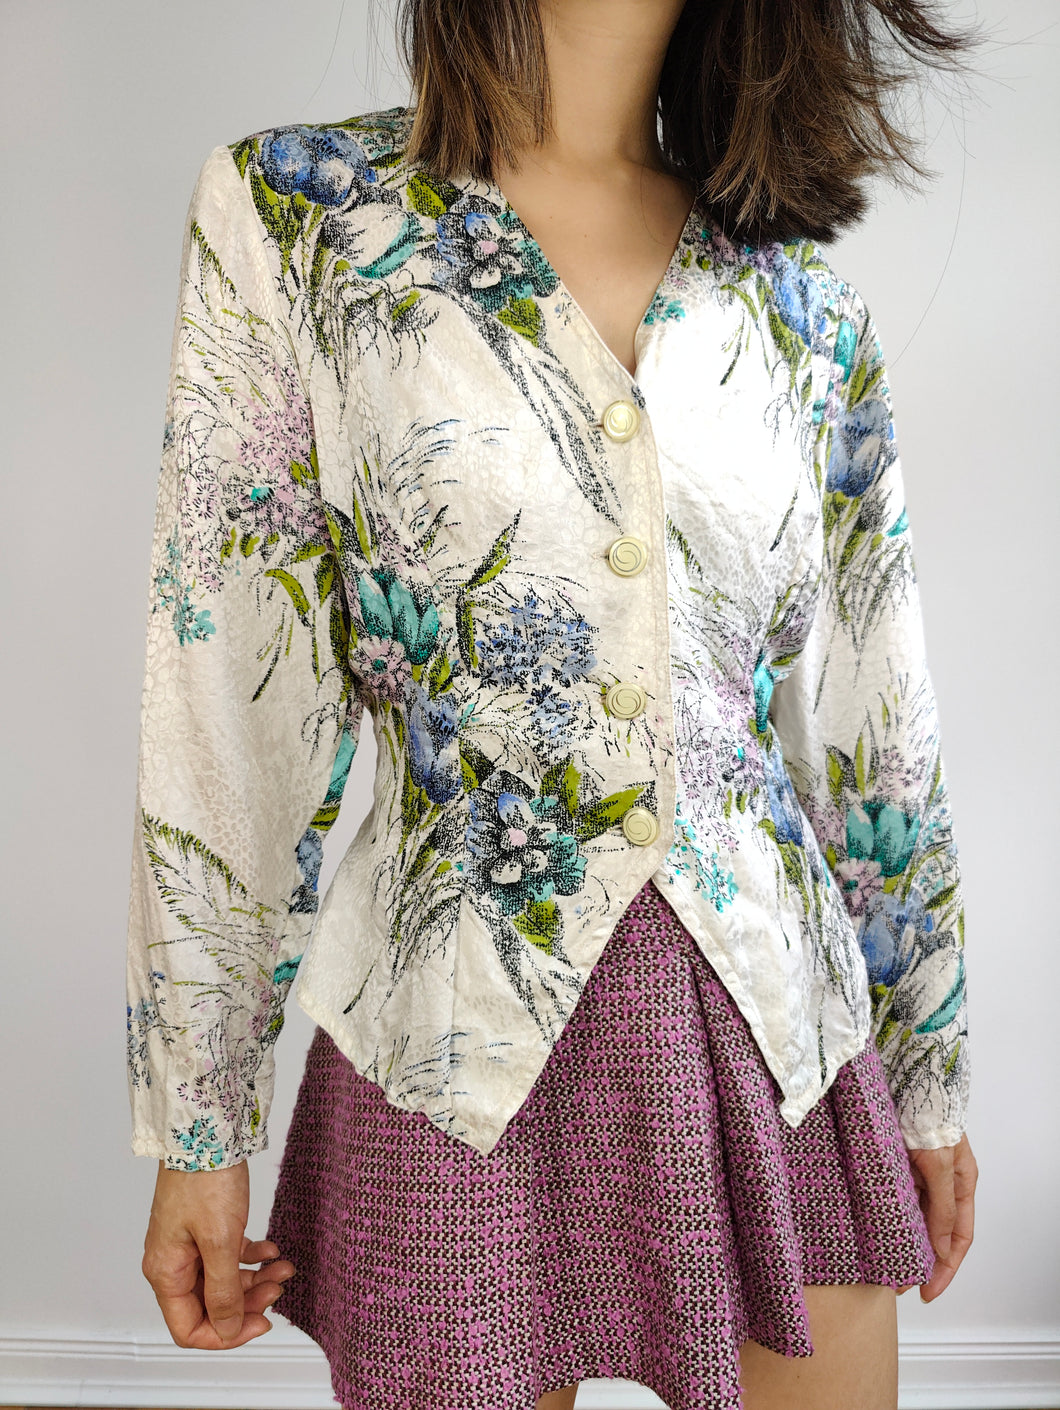 The Romantic White Floral Pattern Blouse | Vintage flower print feminine blouse fitted waist S